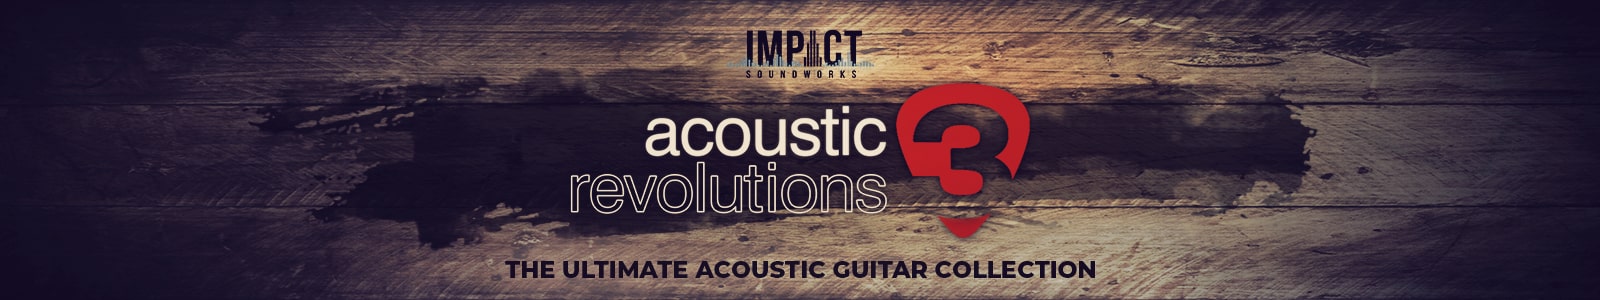 acoustic revolutions 3